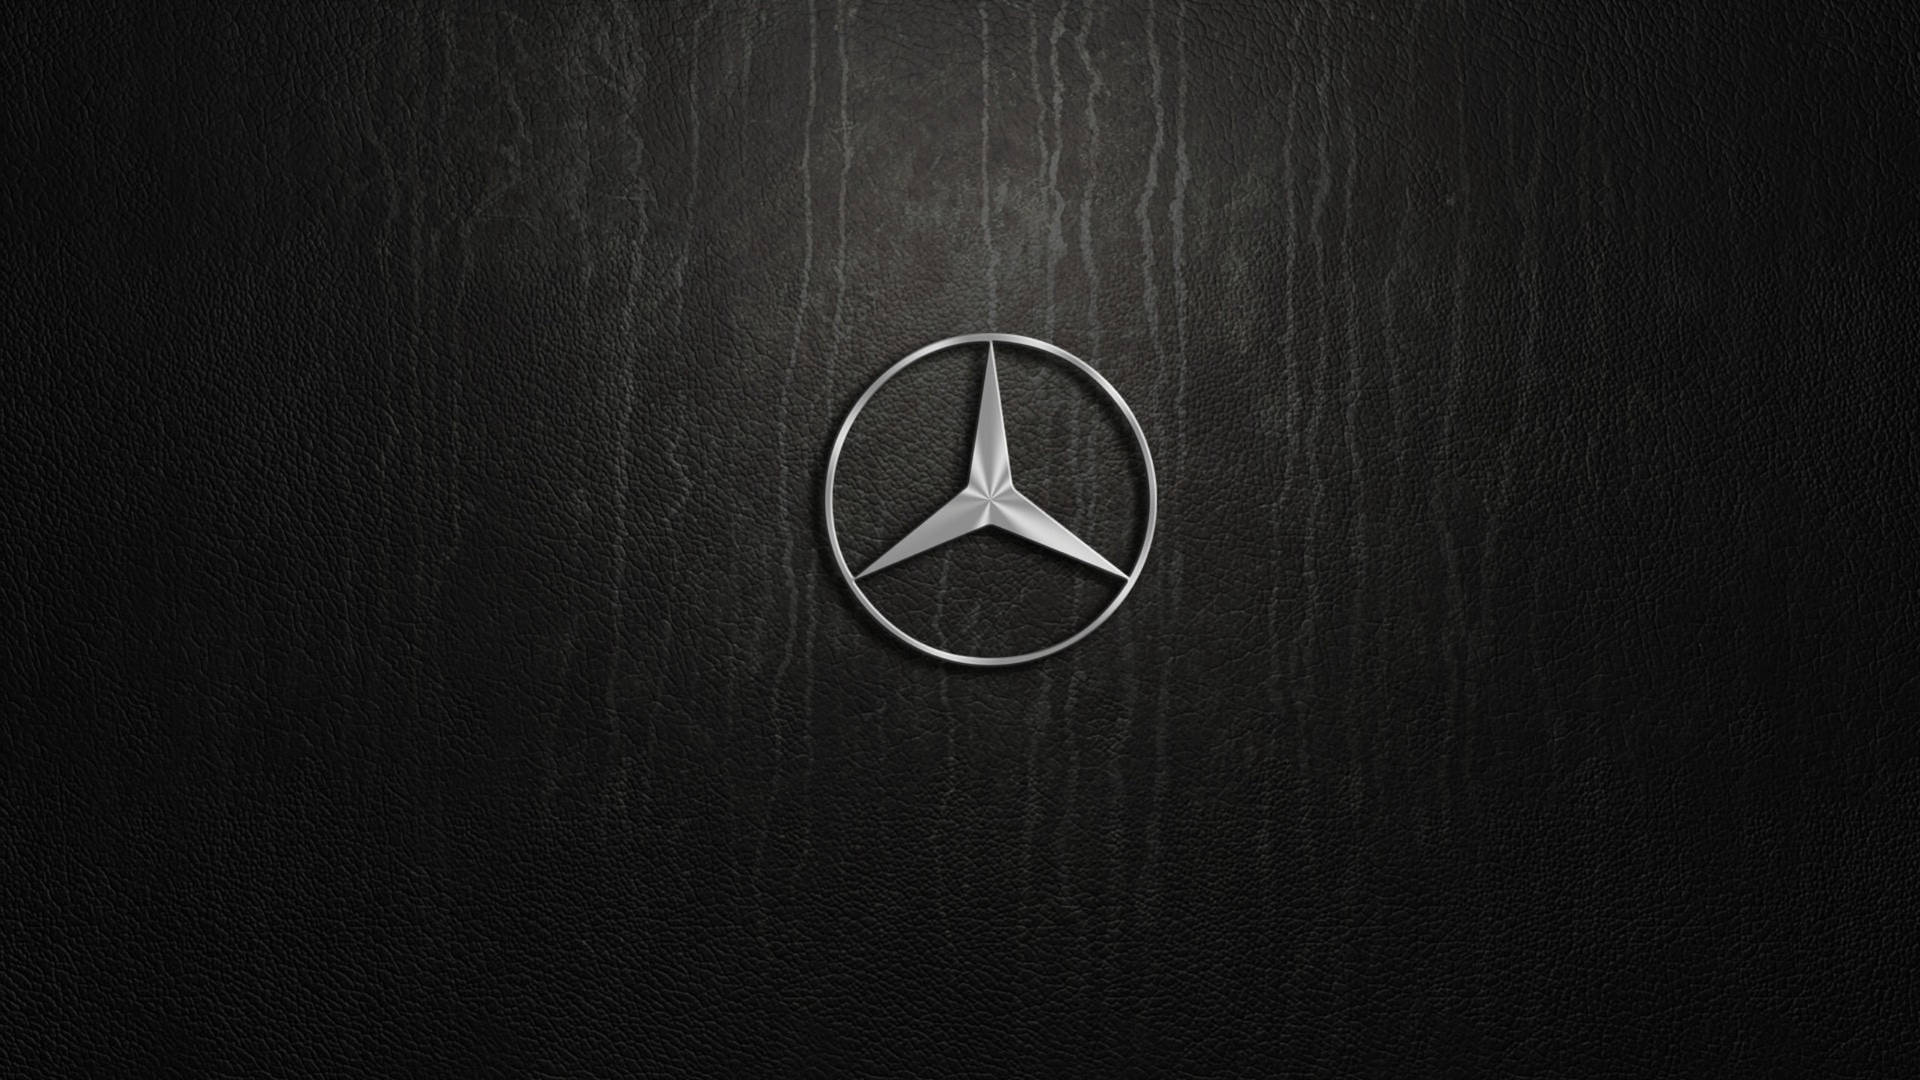 Caption: Silver Mercedes-benz Emblem Artistically Displayed